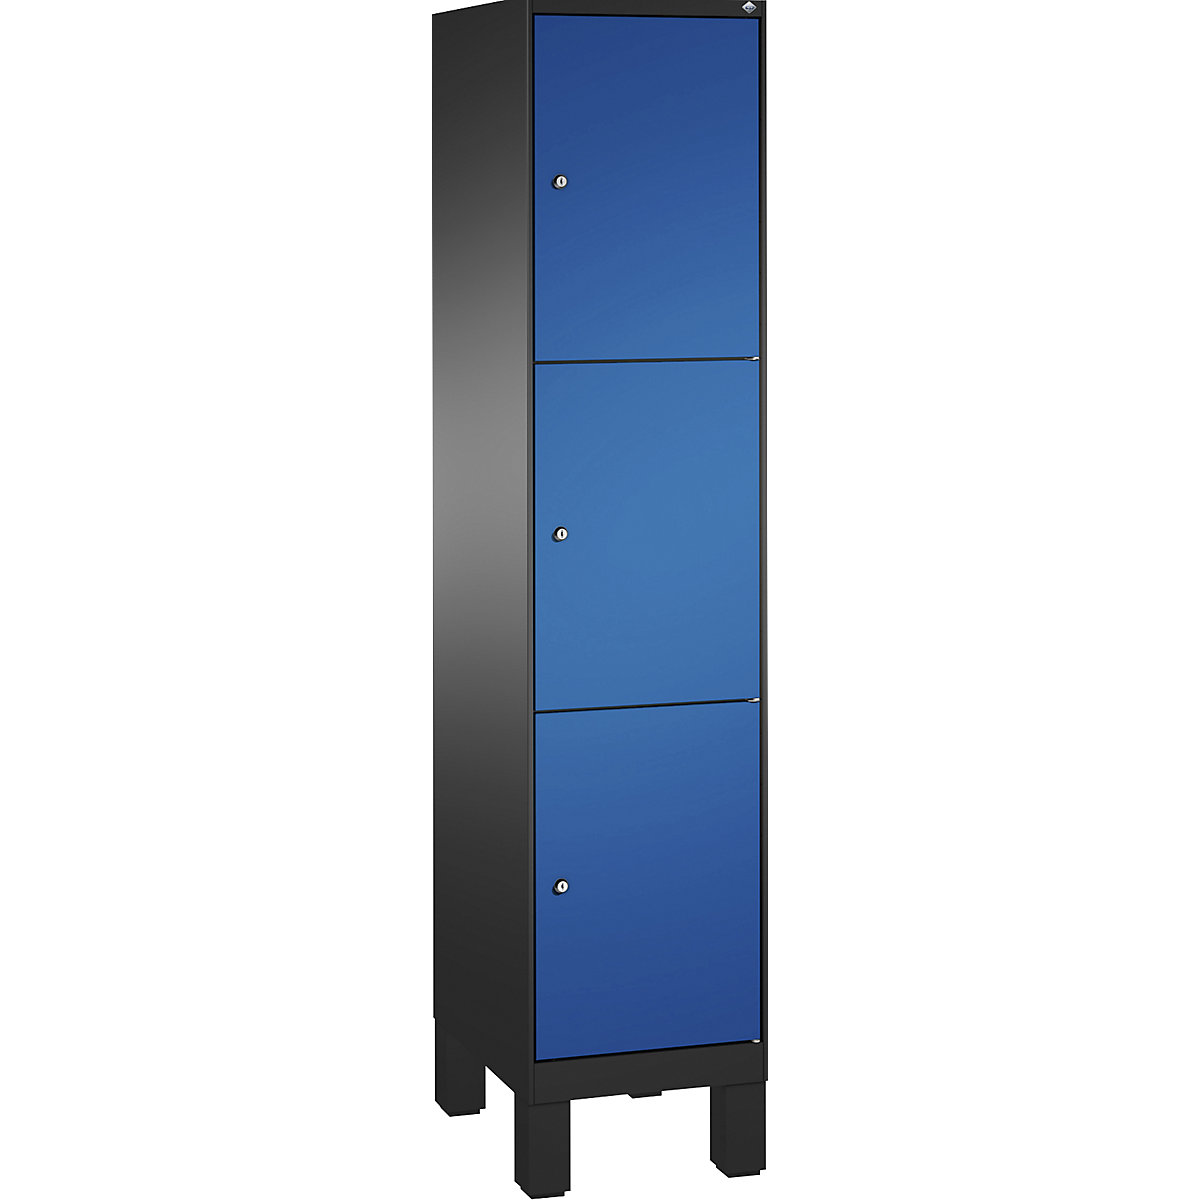 EVOLO locker unit, with feet – C+P